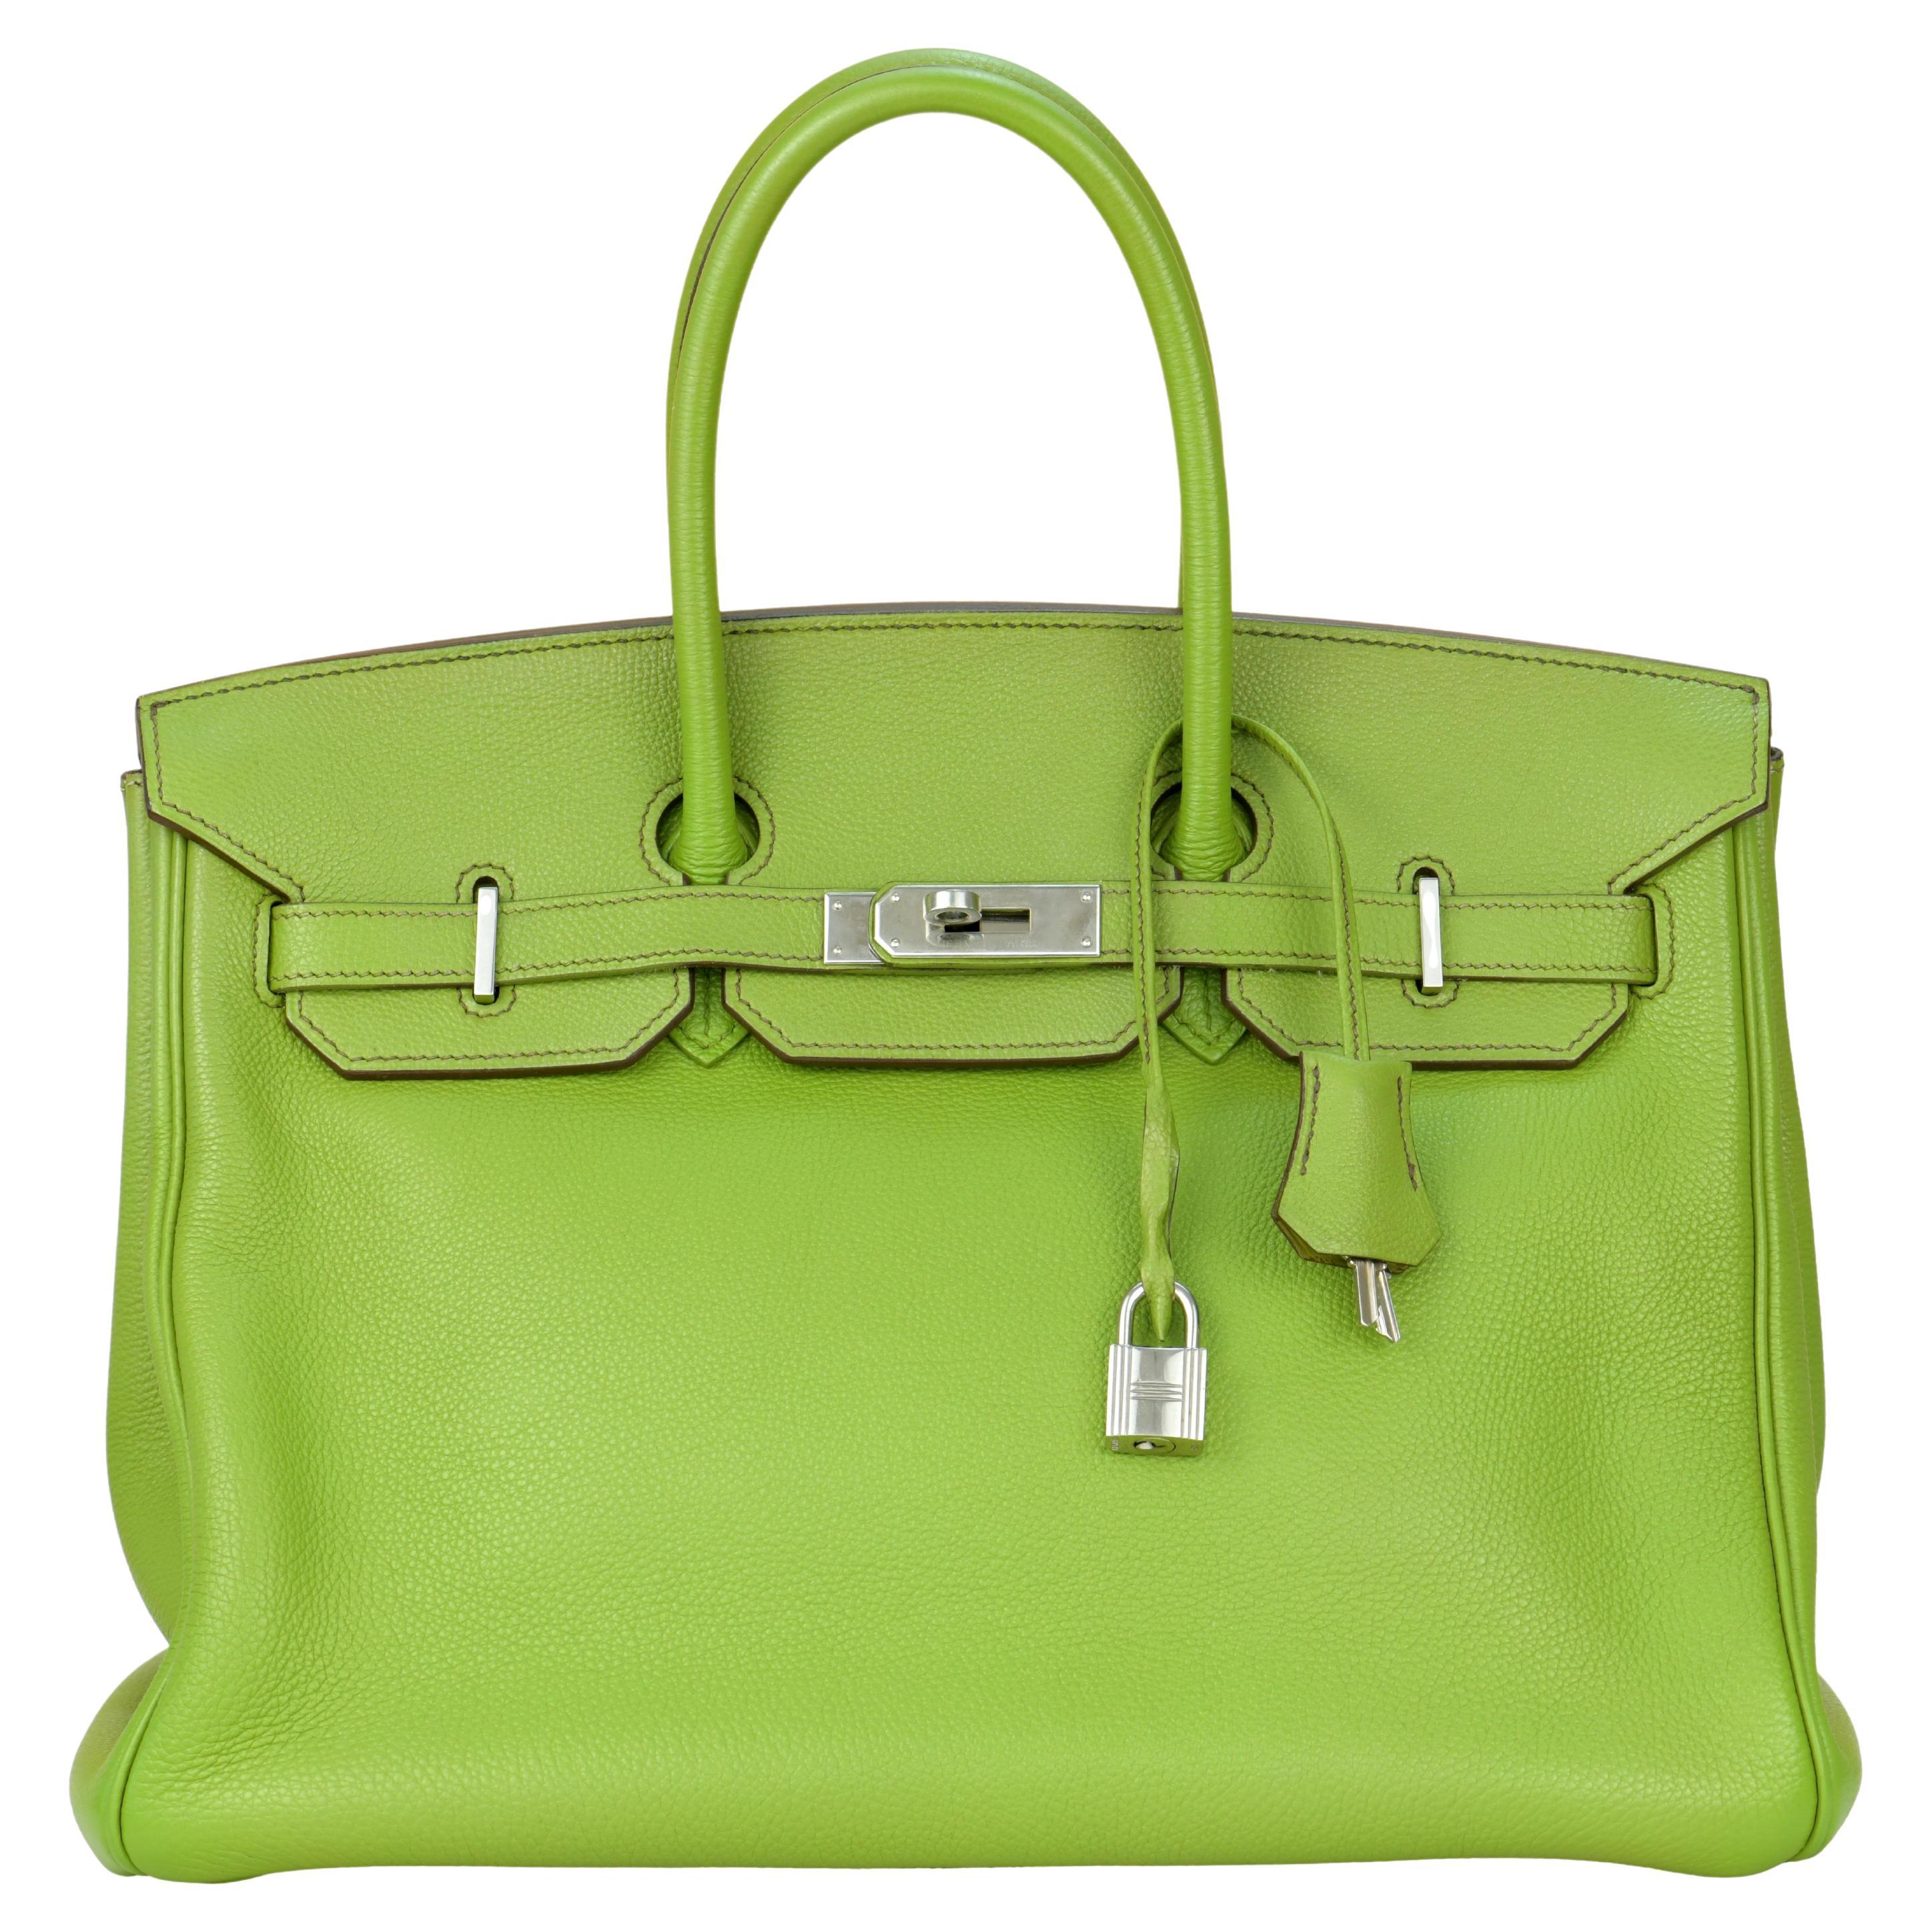 Hermès Anise Green Togo Leather Birkin 35cm with Palladium Hardware For Sale